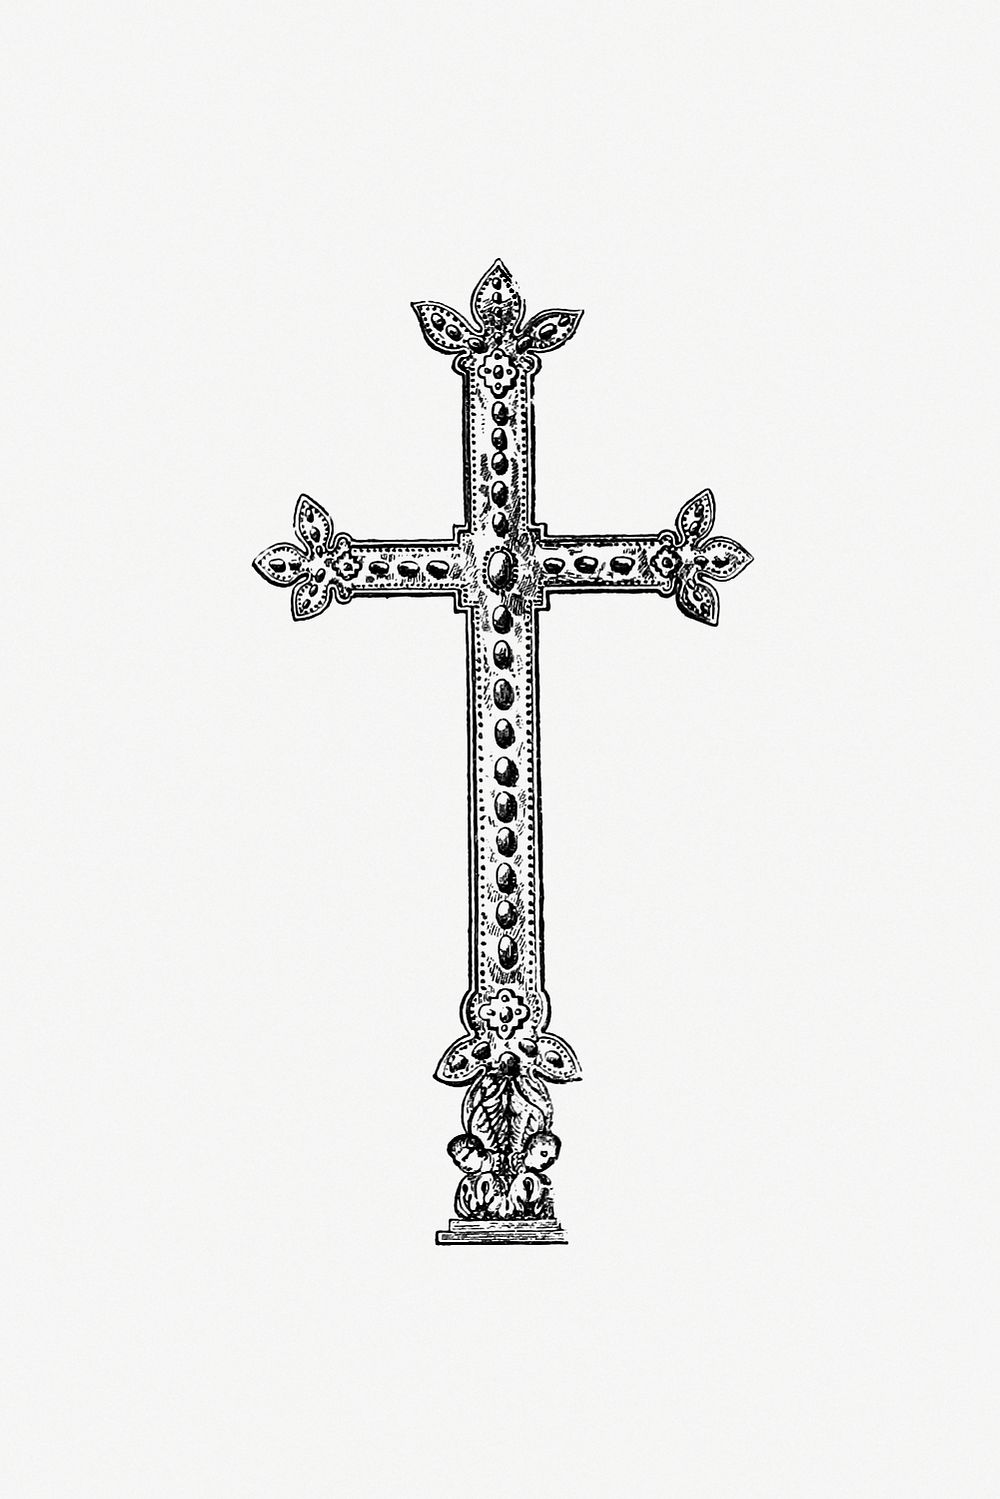 Cross from Les Chroniqueurs de | Free Photo Illustration - rawpixel